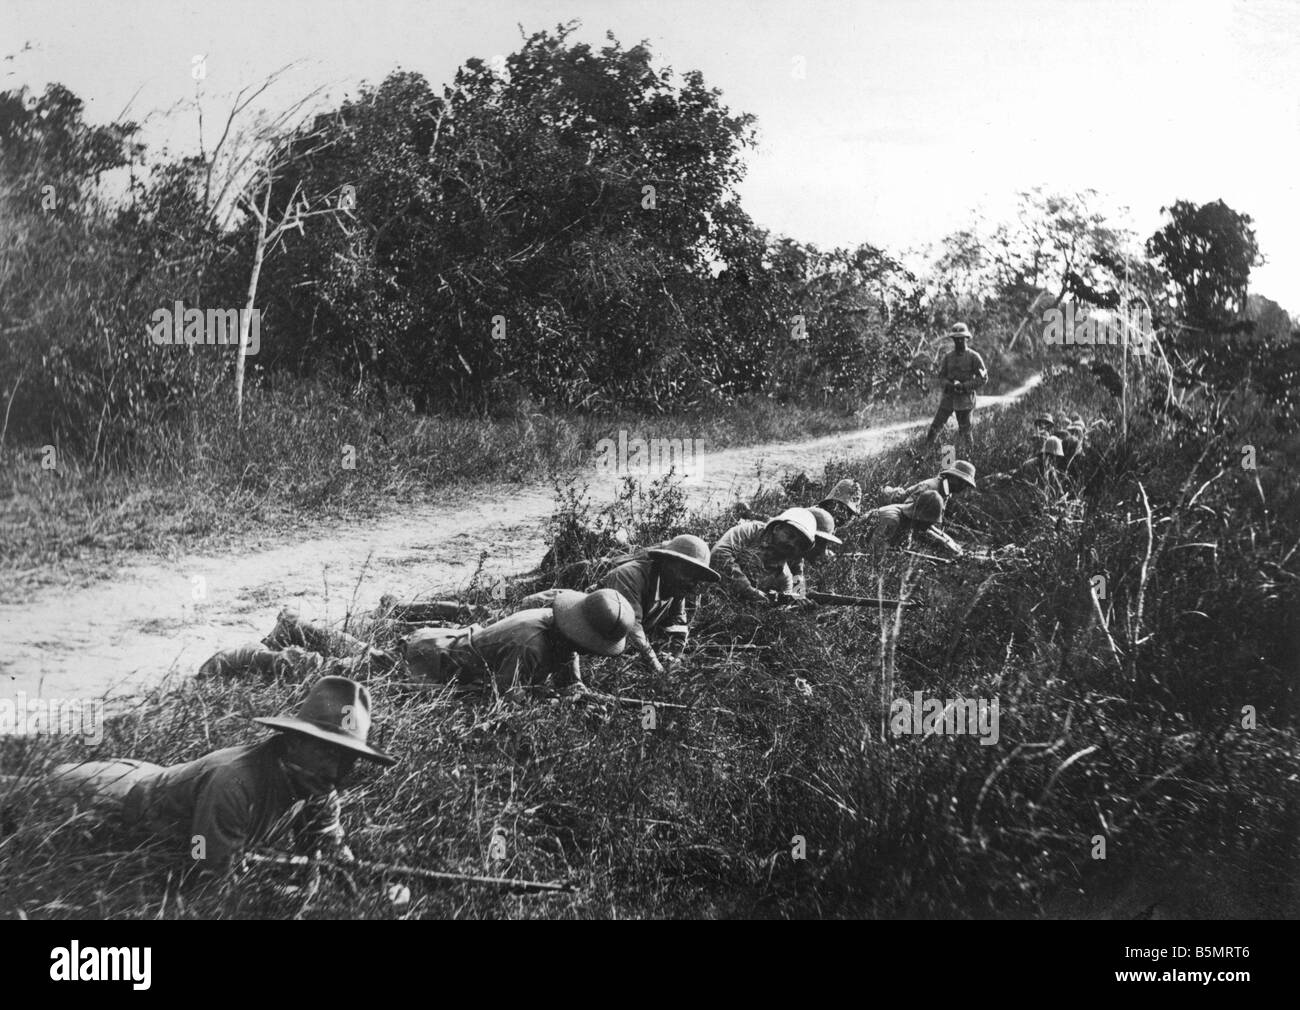 9AF 1914 0 0 A1 Campo 6 Esercizio del tedesco orientale truppe Af Guerra Mondiale 1 guerra nelle colonie tedesco East Africa Tanzania ora campo Foto Stock